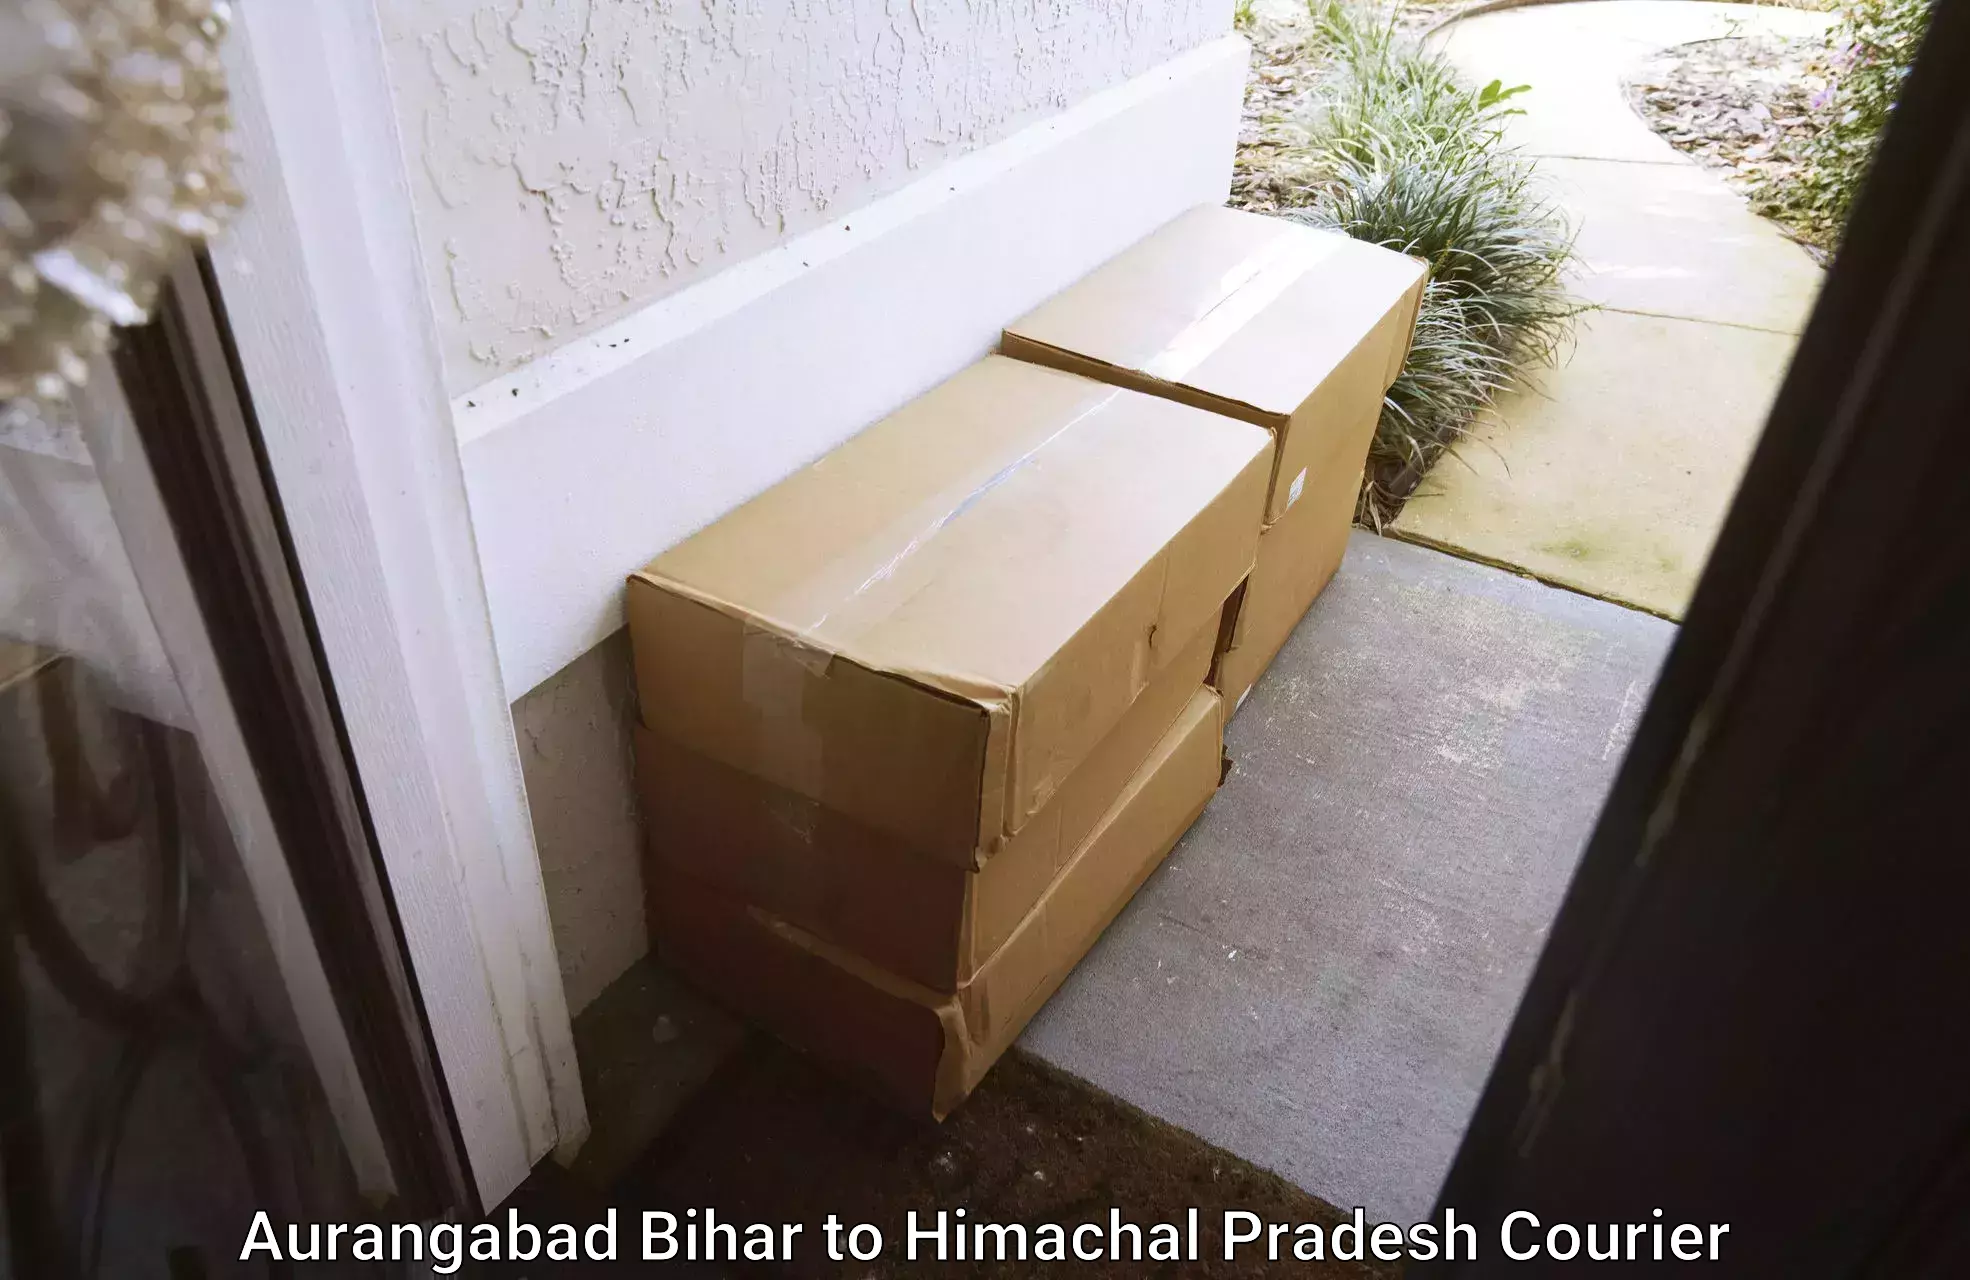 Furniture delivery service Aurangabad Bihar to Waknaghat